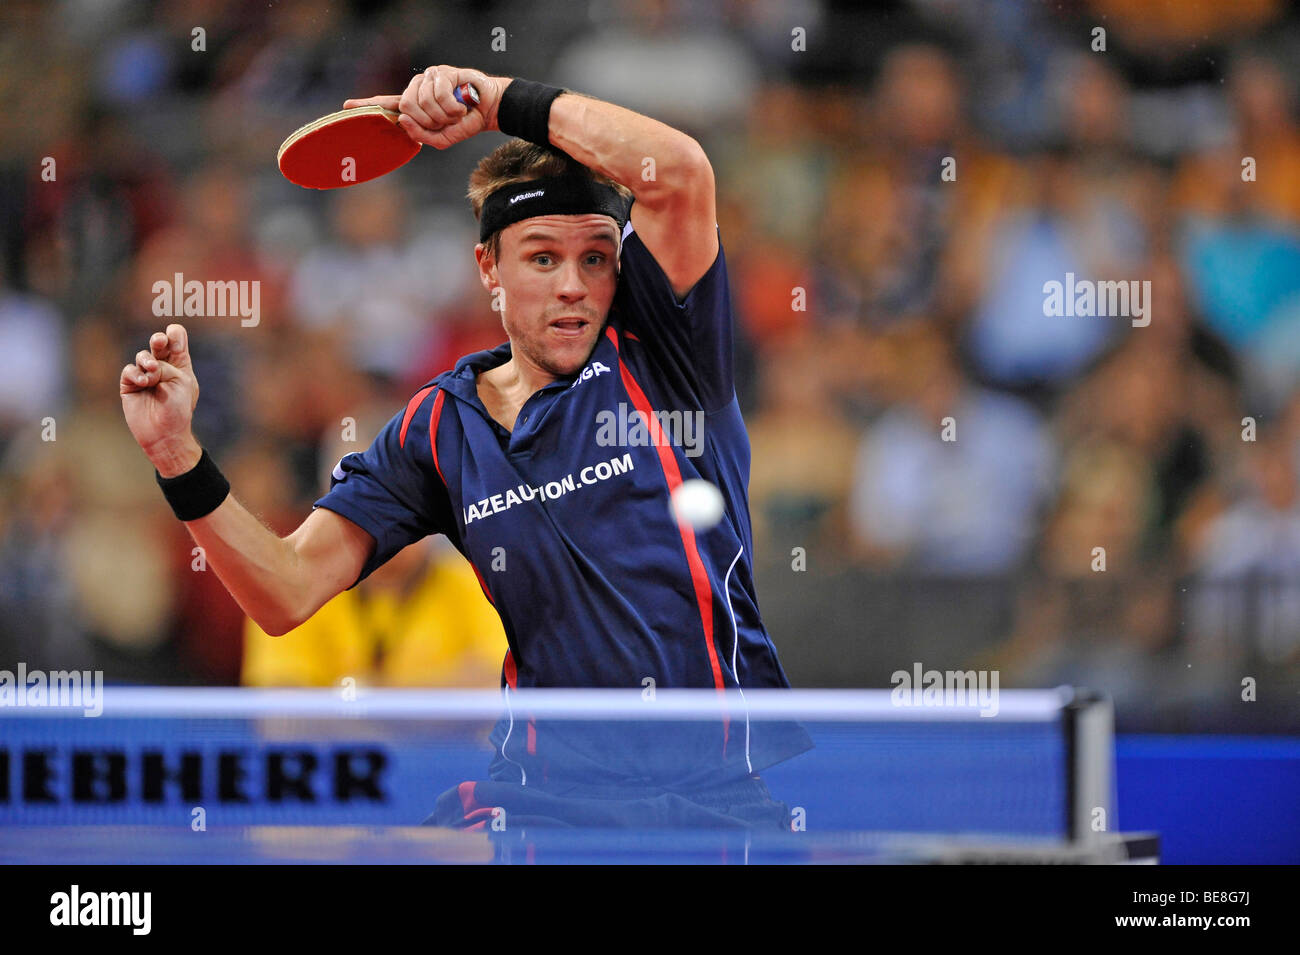 Europameister Michael MAZE, Dänemark, table Tennis EM 2009, Porsche-Arena, Stuttgart, Baden-Württemberg, Deutschland, Europa Stockfoto